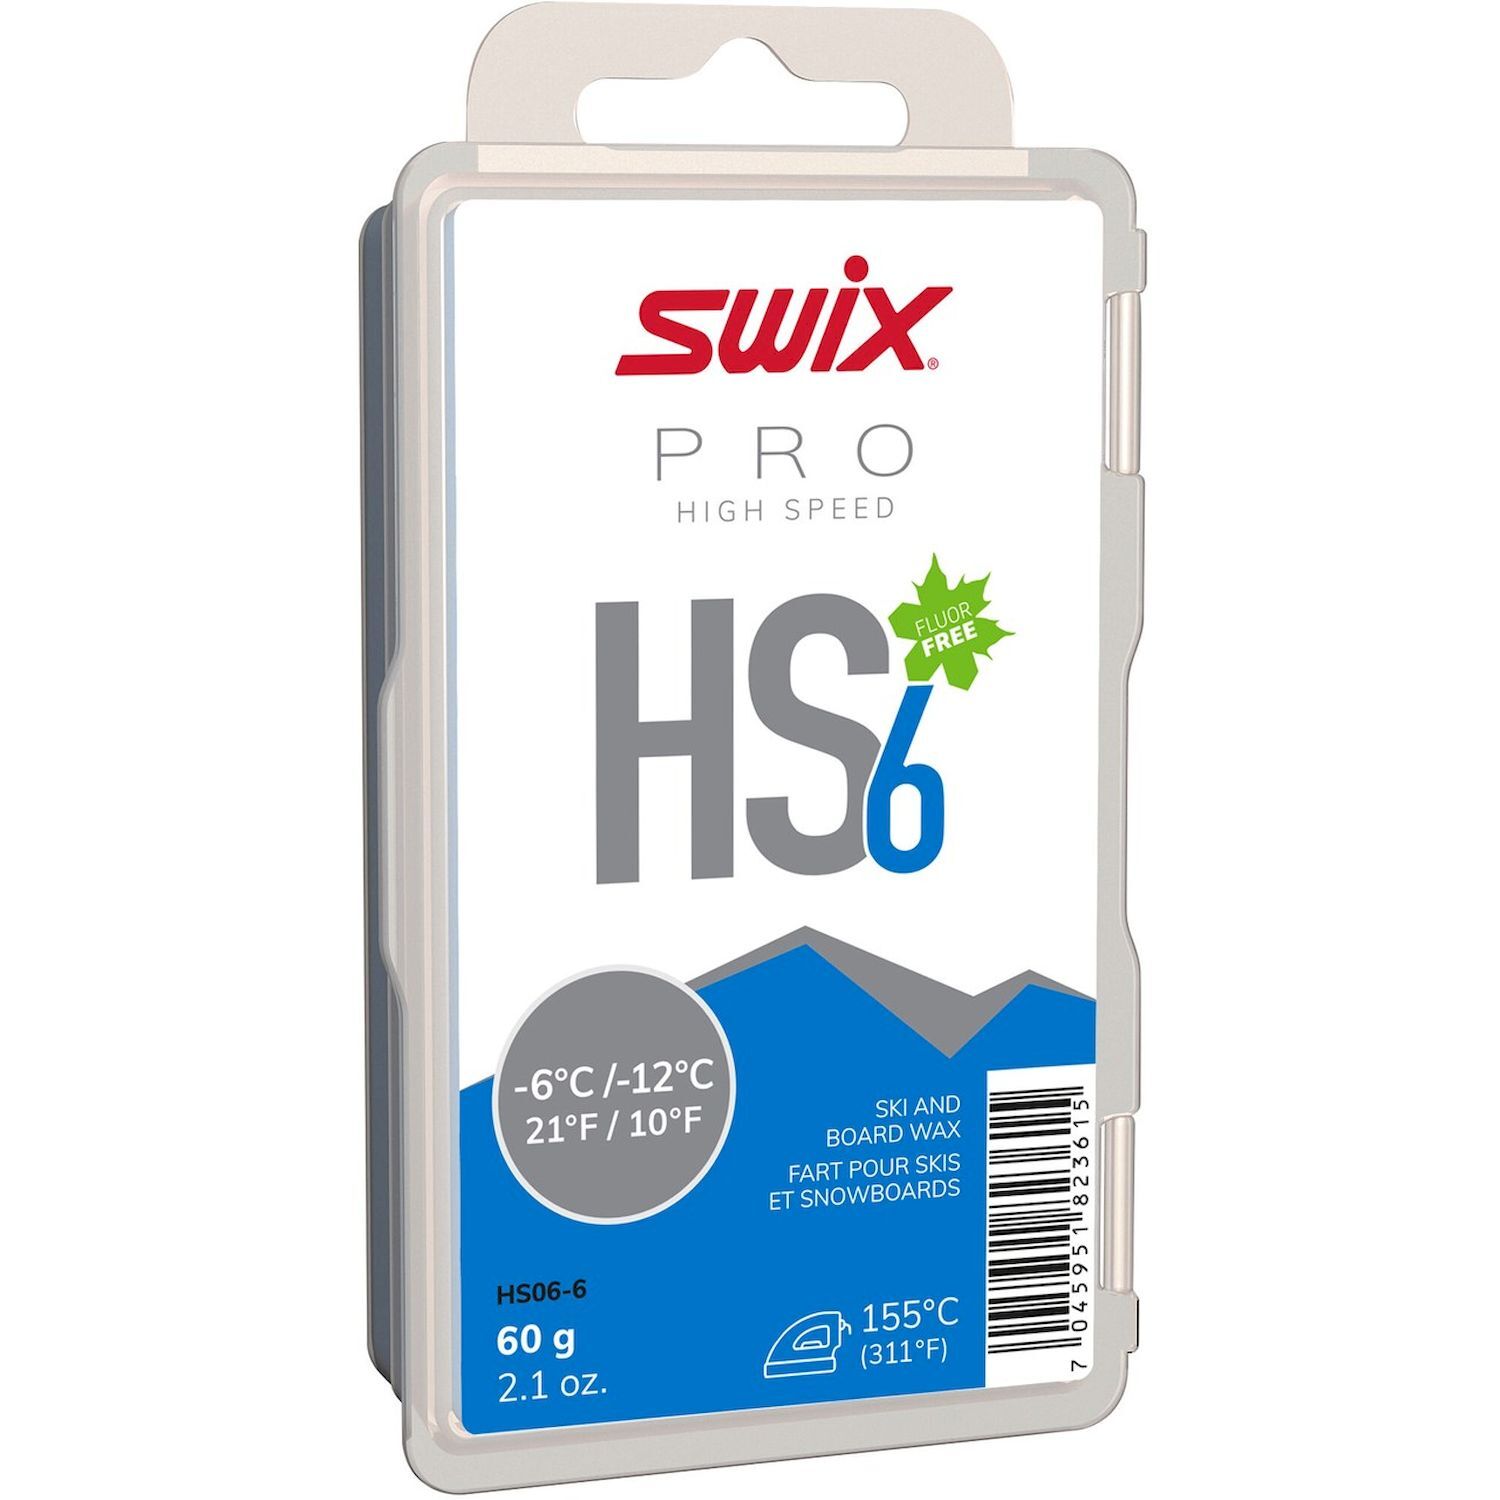 Swix HS6 Blue -6°C/-12°C 60 g - Skiwachs